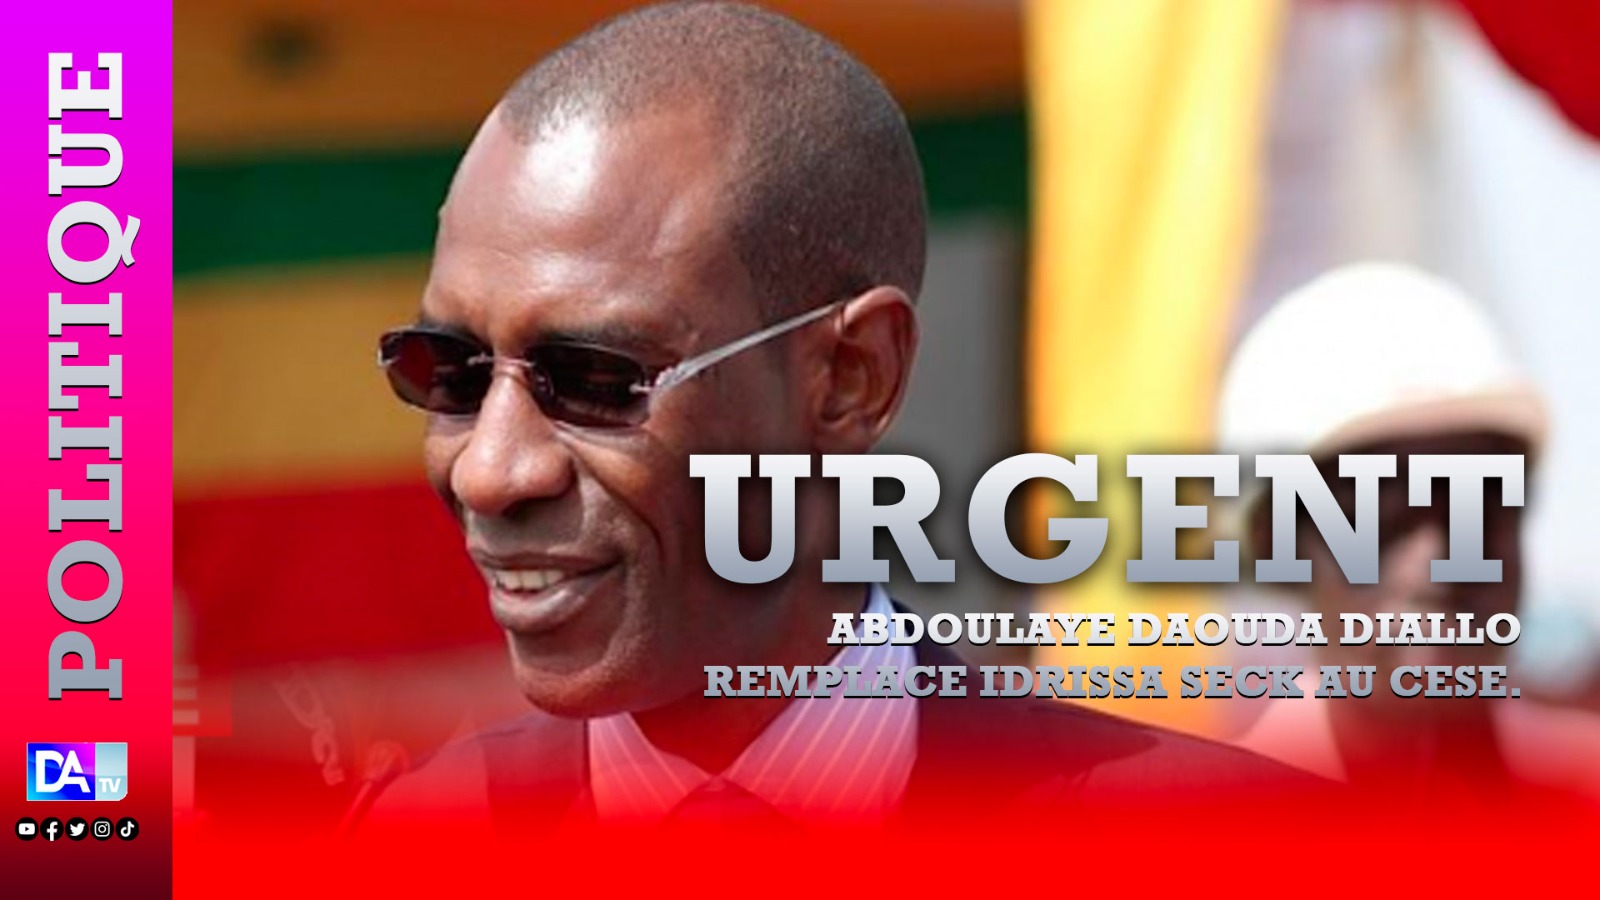 Urgent : Abdoulaye Daouda Diallo remplace Idrissa Seck au CESE.